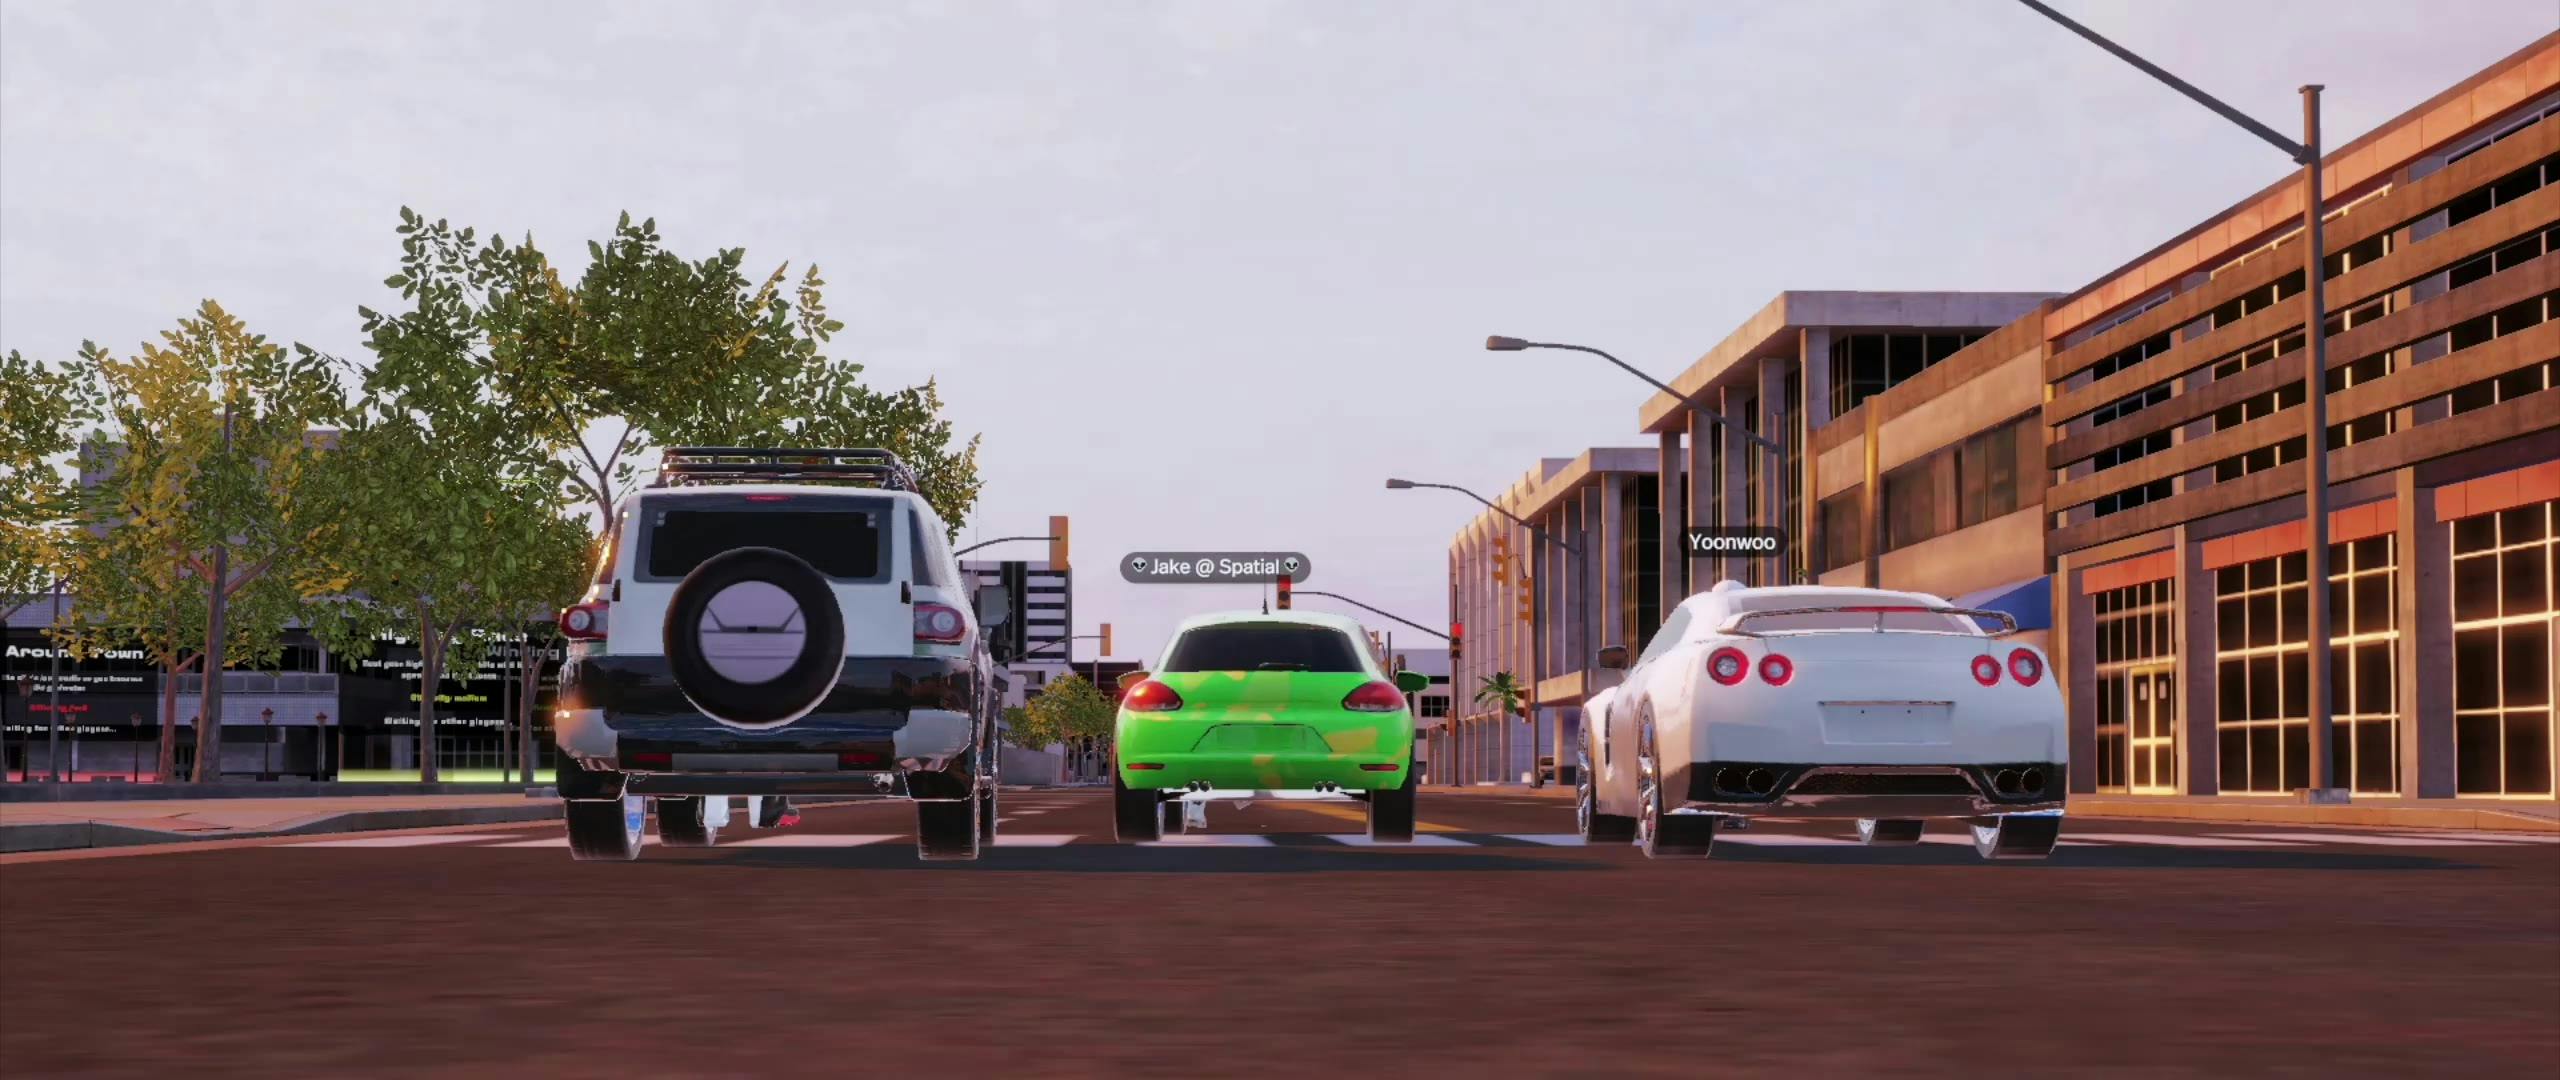 Premium Vector  Race cars driving road online platform video game